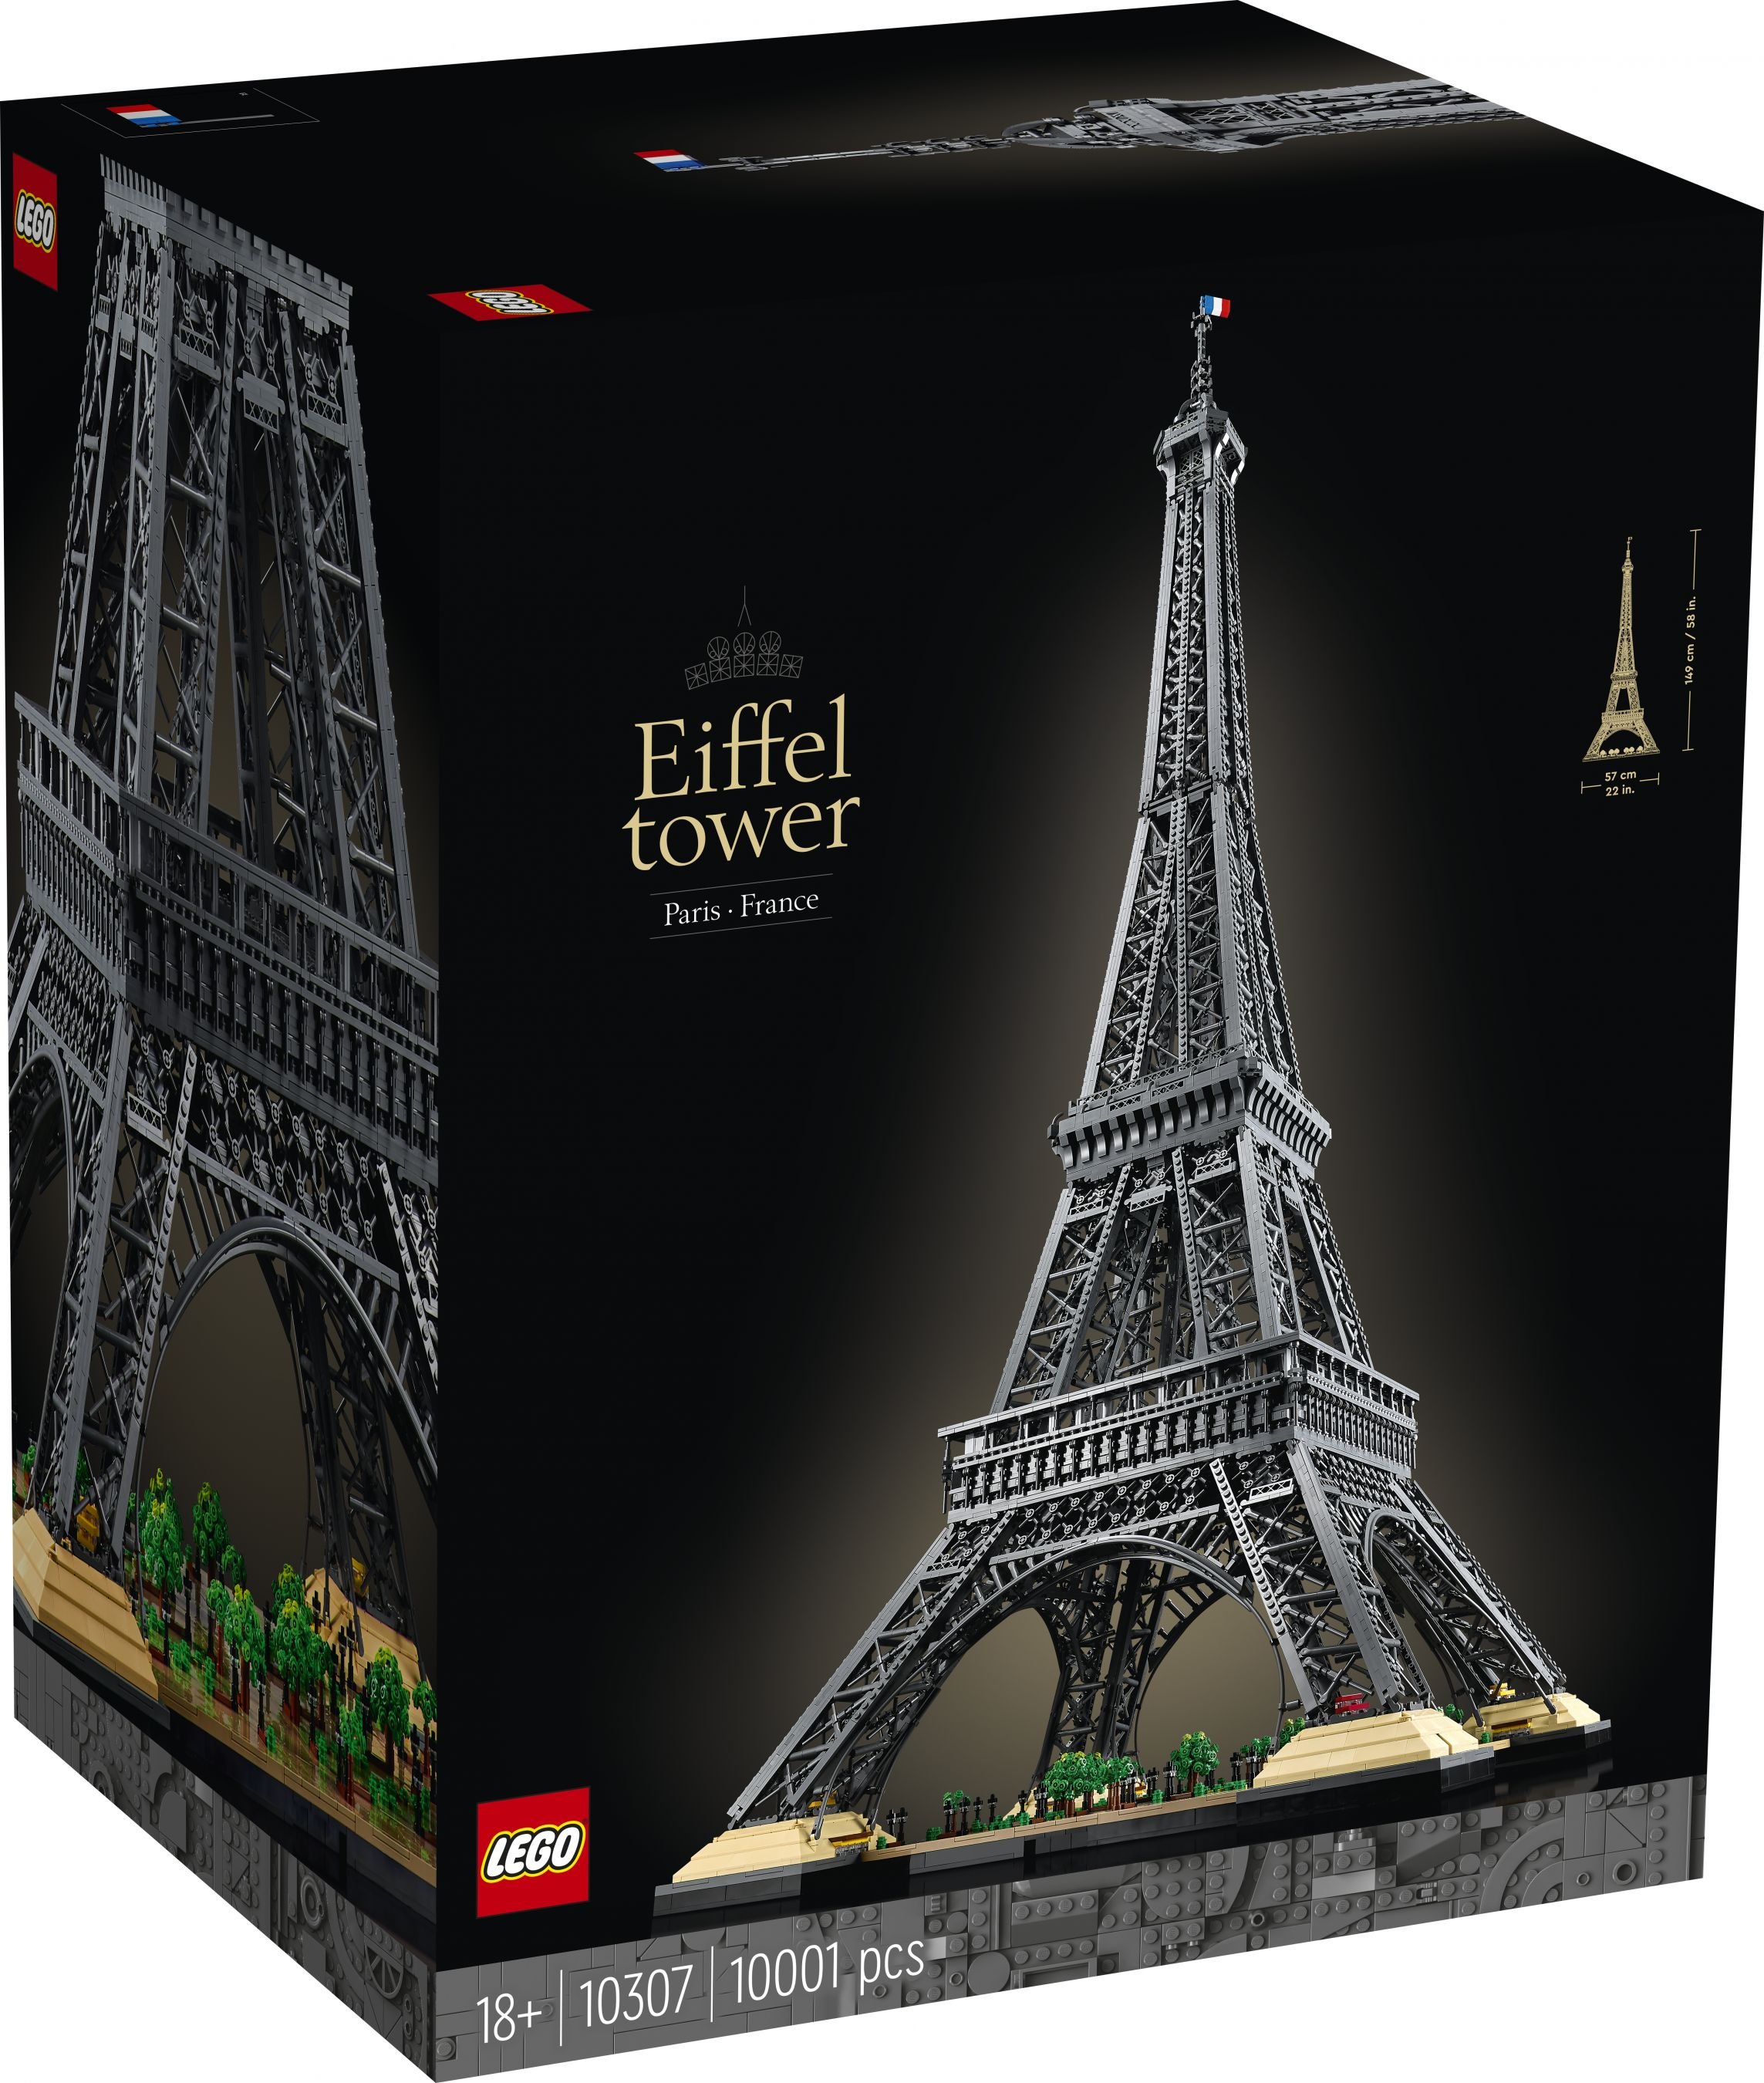 LEGO Advanced Models 10307 Eiffelturm Paris LEGO_10307_Box1_V29.jpg